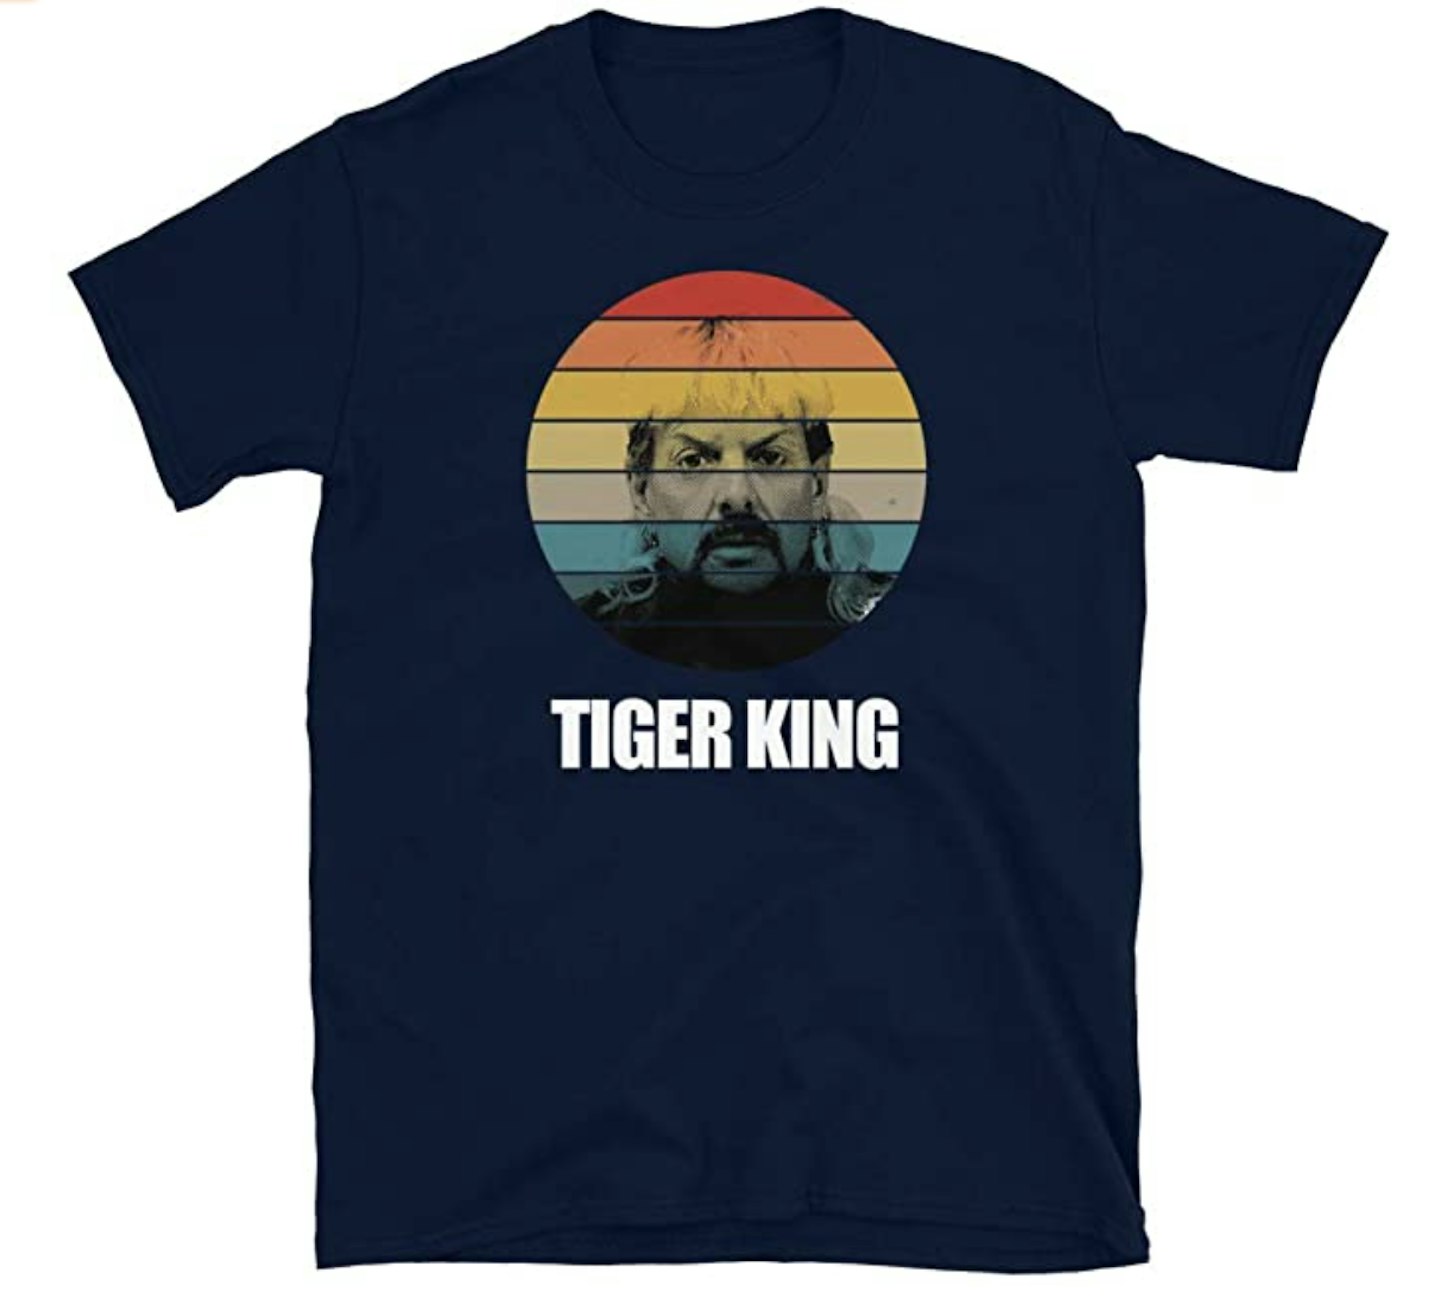 Tiger King merch